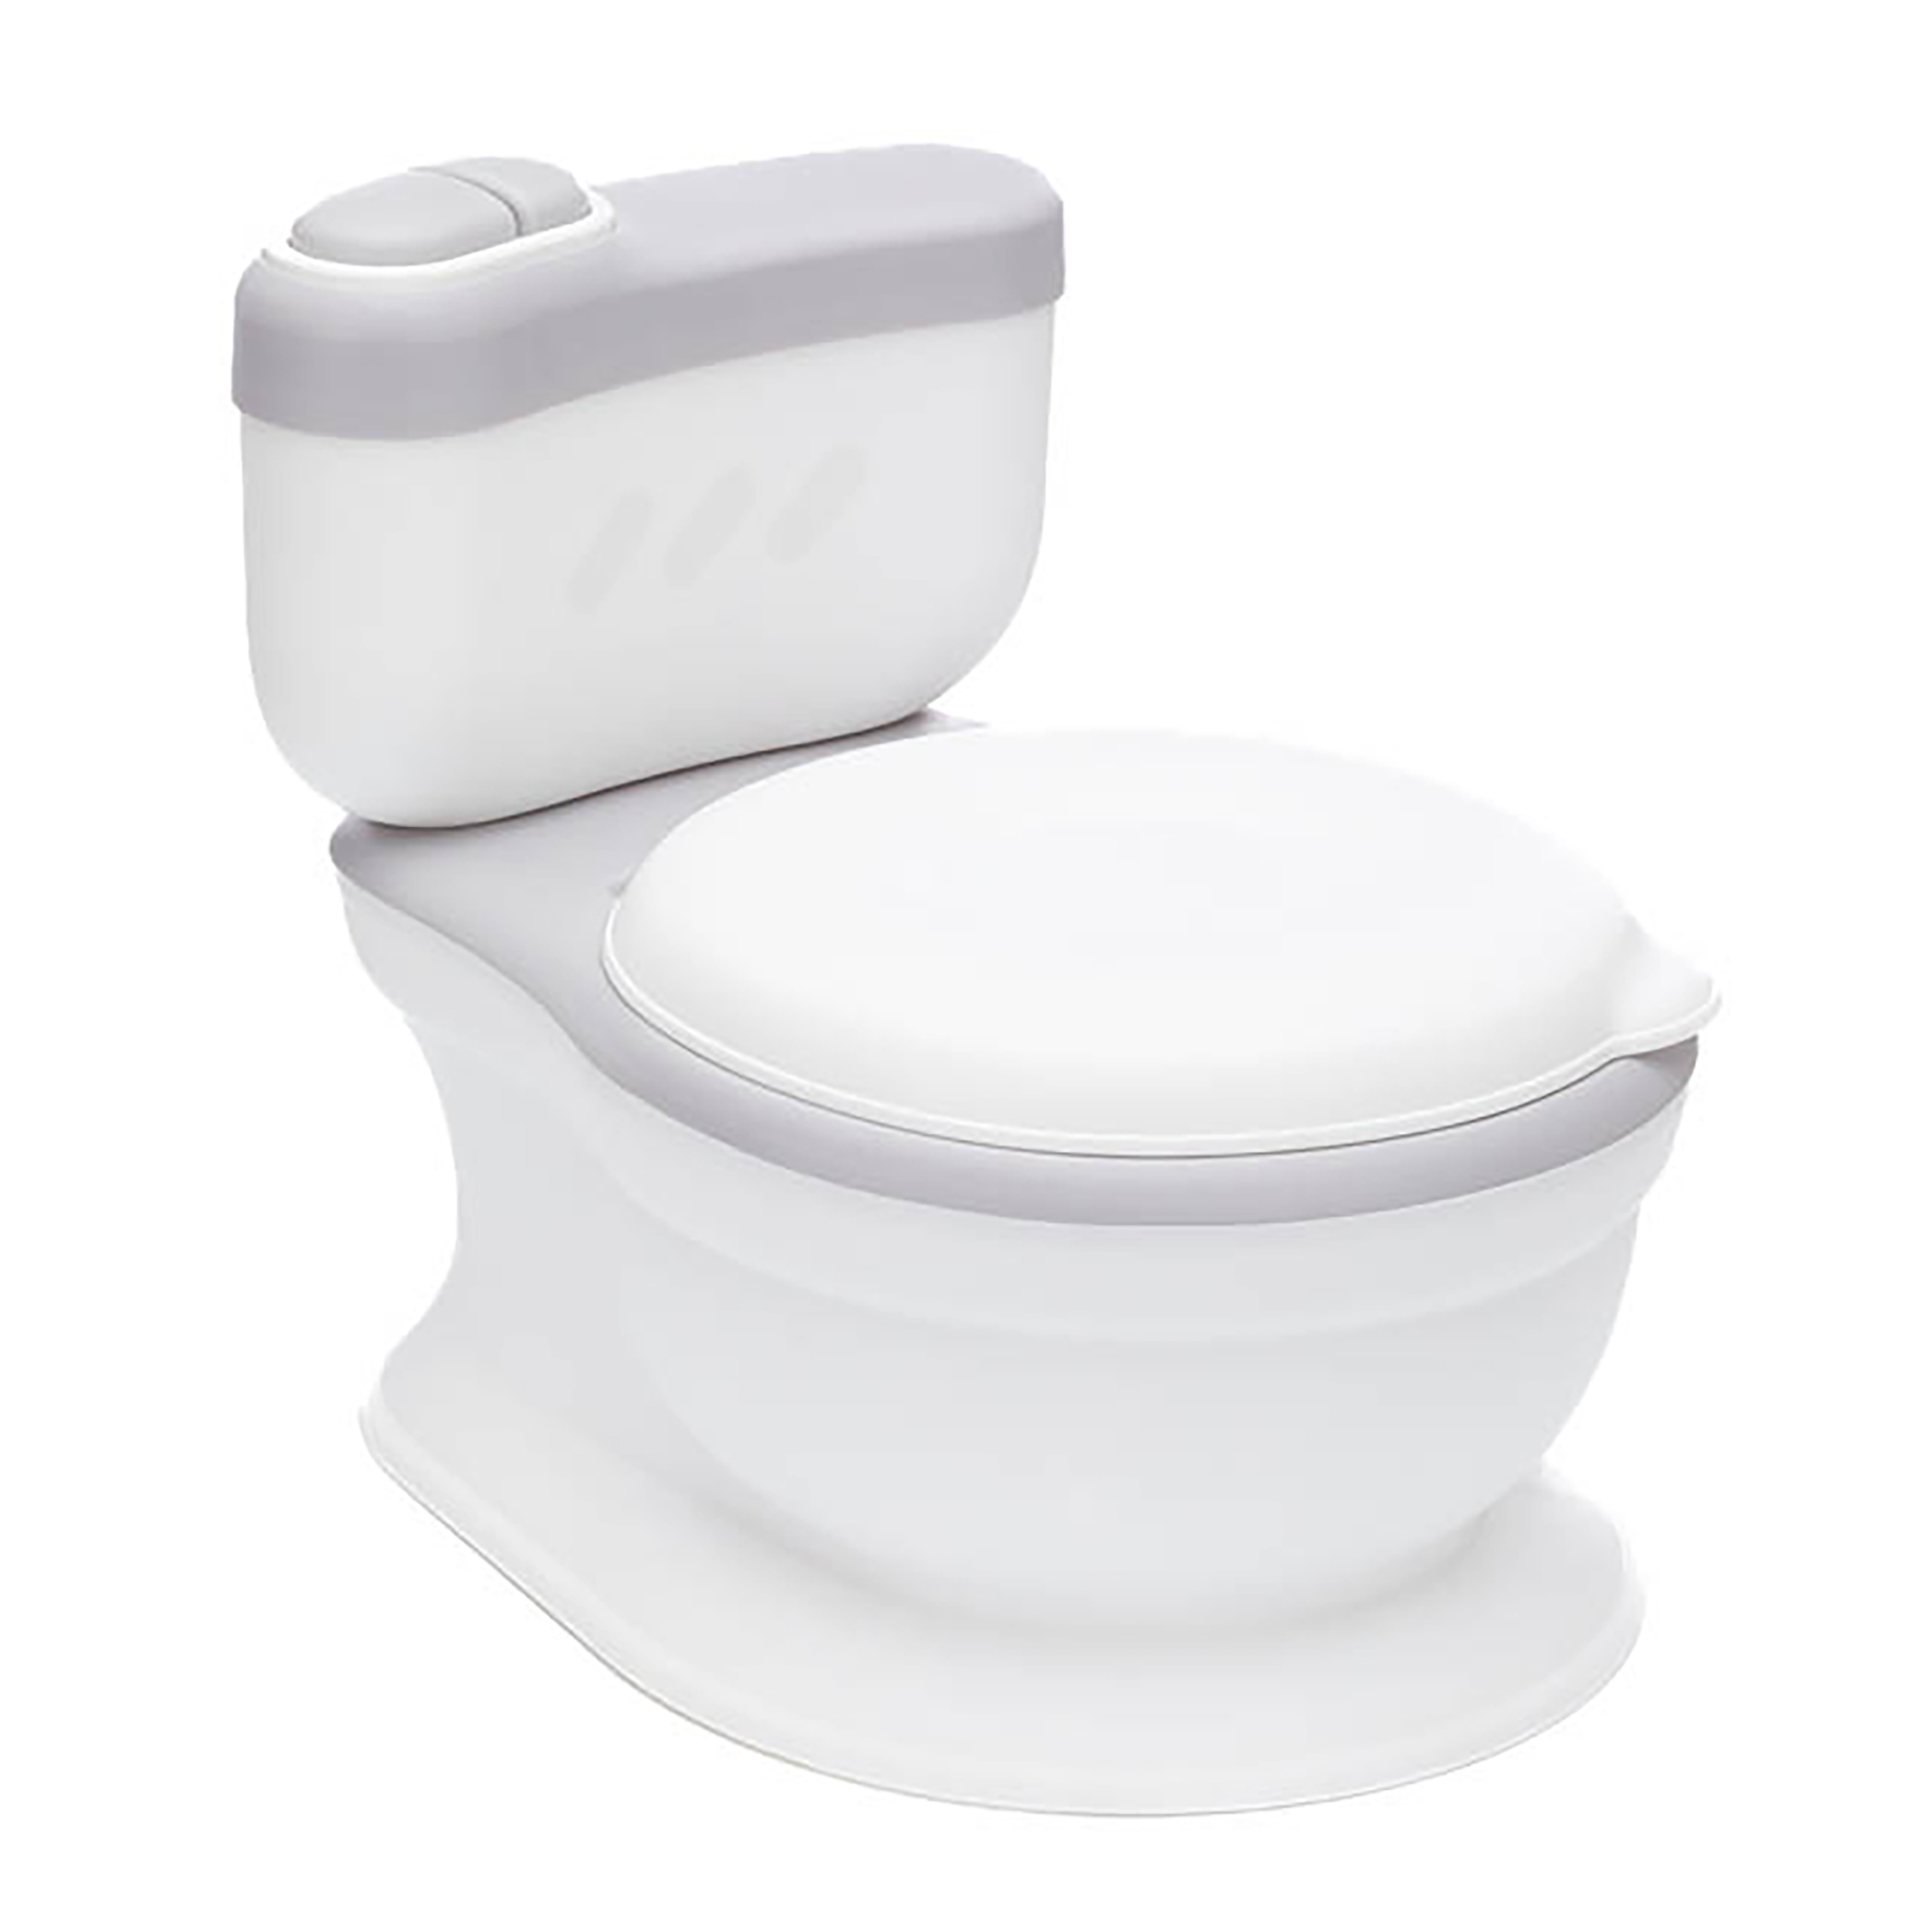 Mini Toilette Marlin fillikid Grau 2000585523404 1